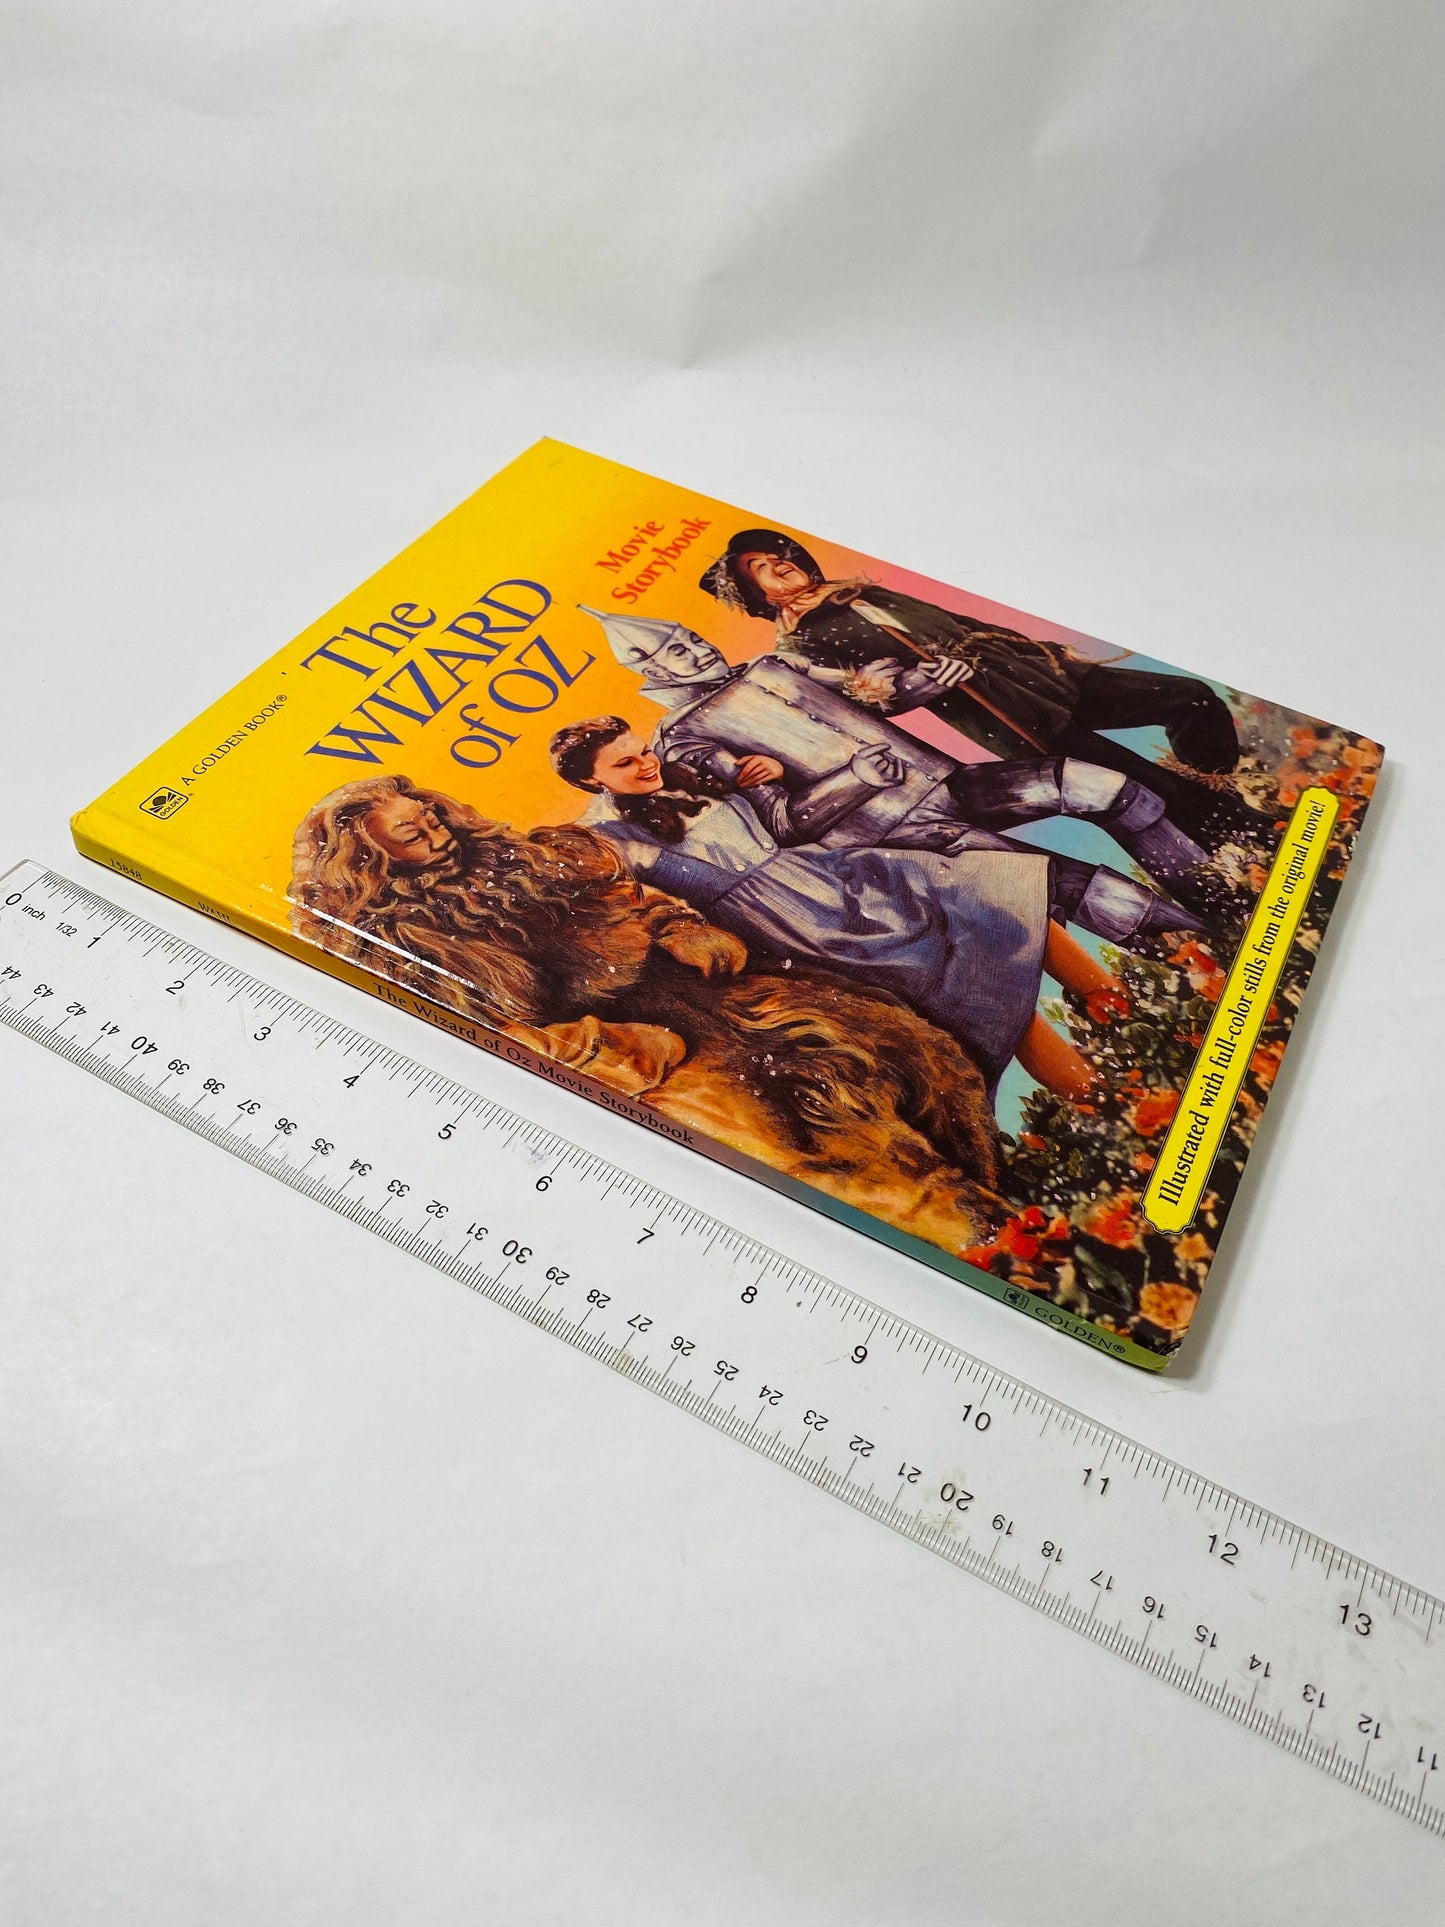 Wizard of Oz Movie Storybook by L Frank Baum circa 1988 Vintage Golden book decor. Children's gift. Book lover gift. Dorothy Lion